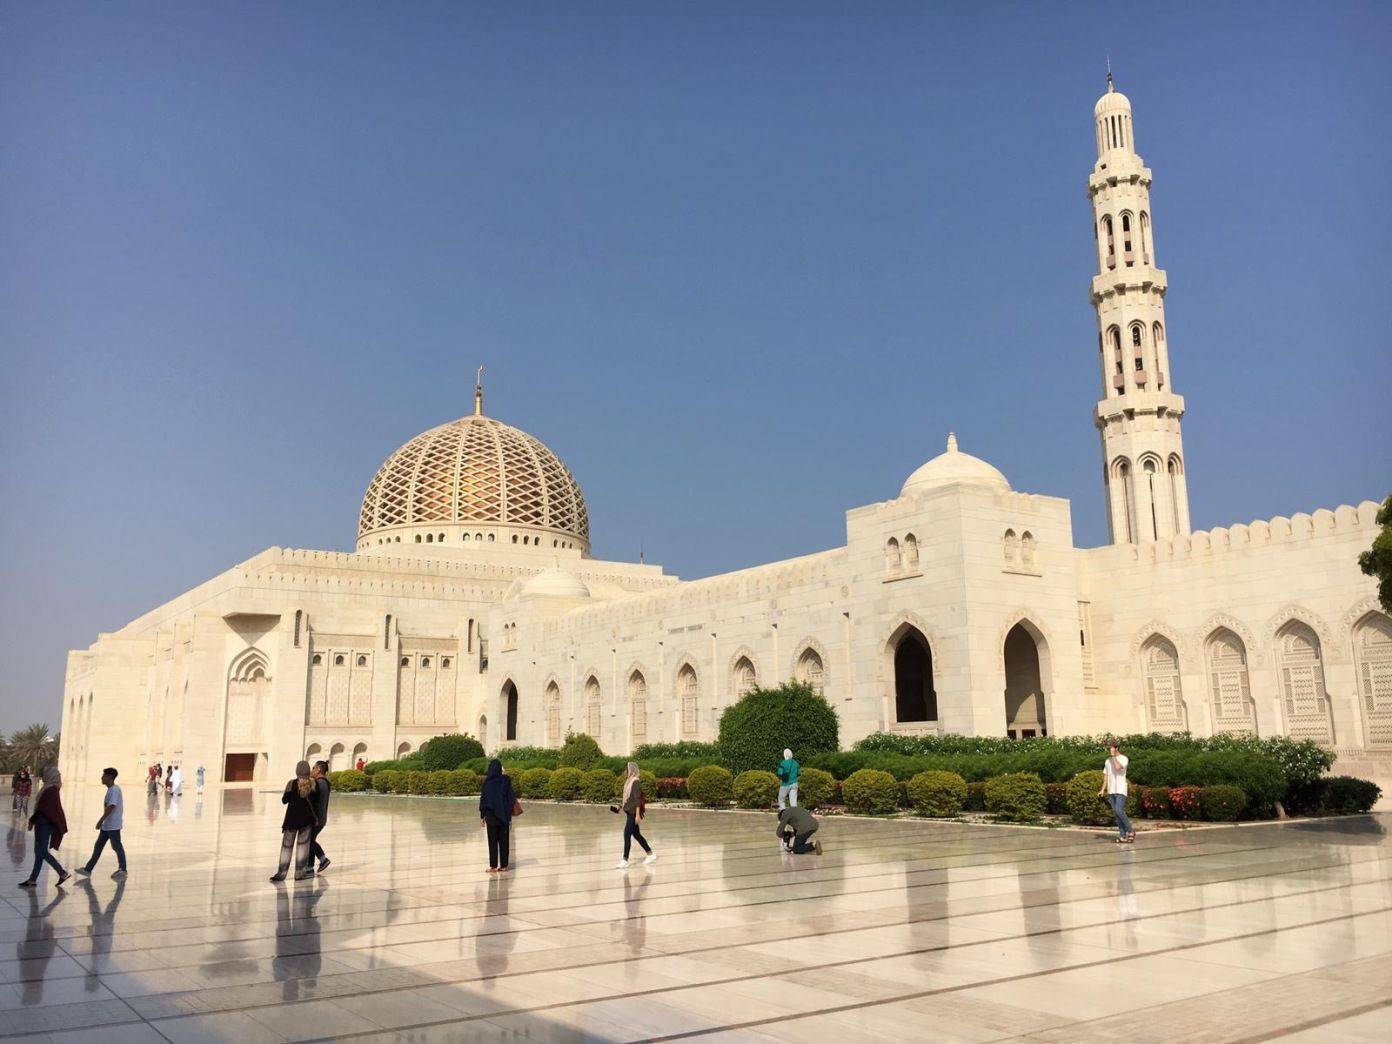 Bienvenu à Mascate, capitale lumineuse du sultanat d’Oman